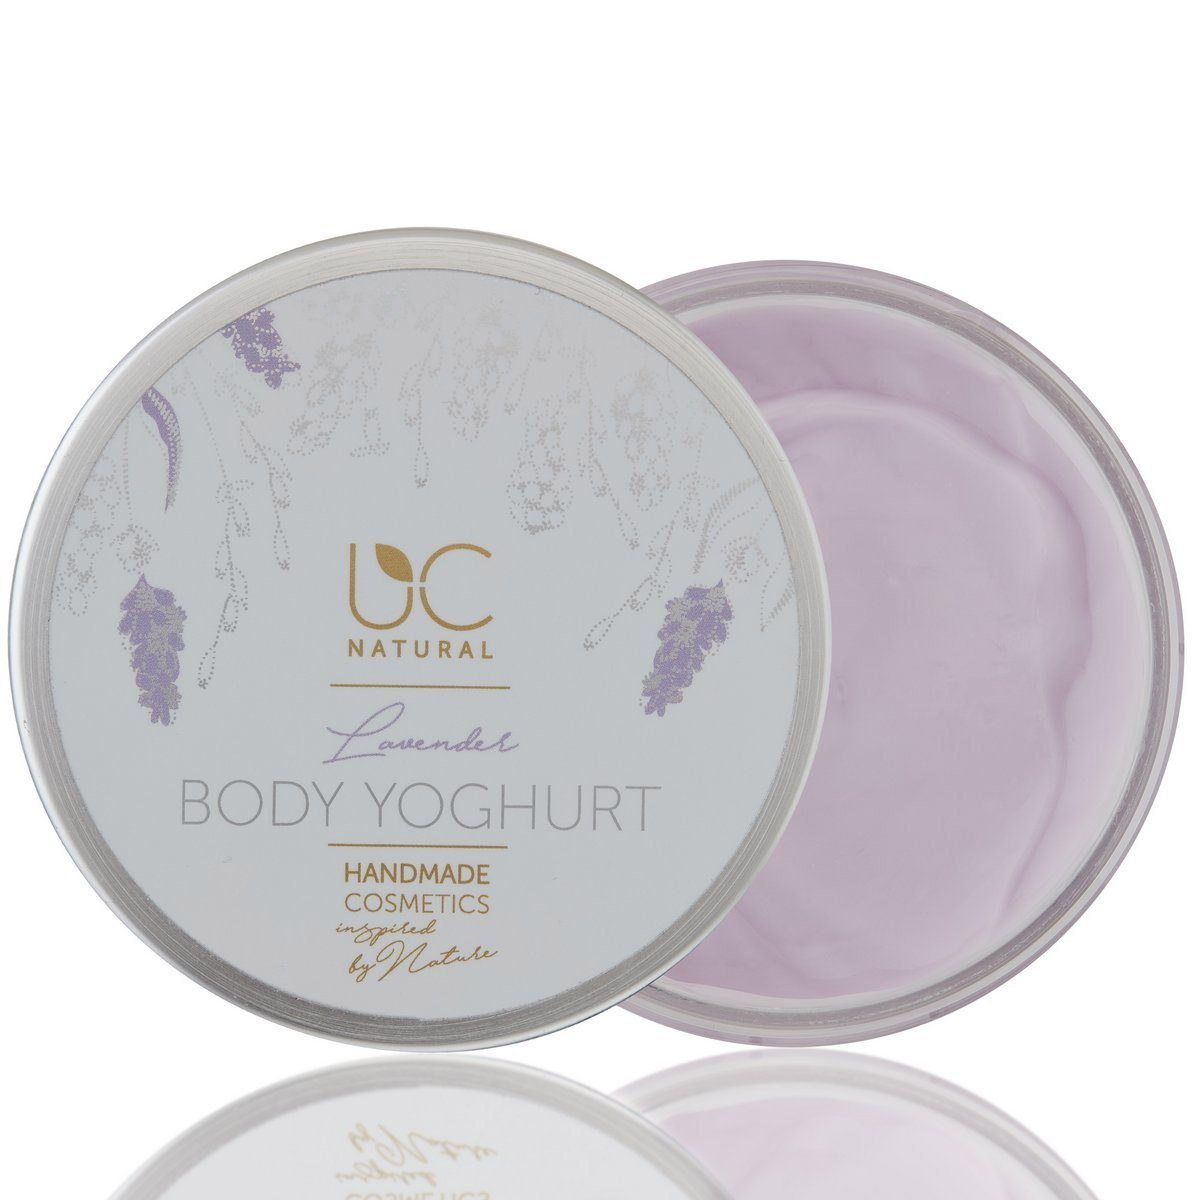 UC Natural Körpercreme UC Natural Body Yoghurt Set, 1-tlg., Lavendel Body Yoghurt handgemacht 220g vegan